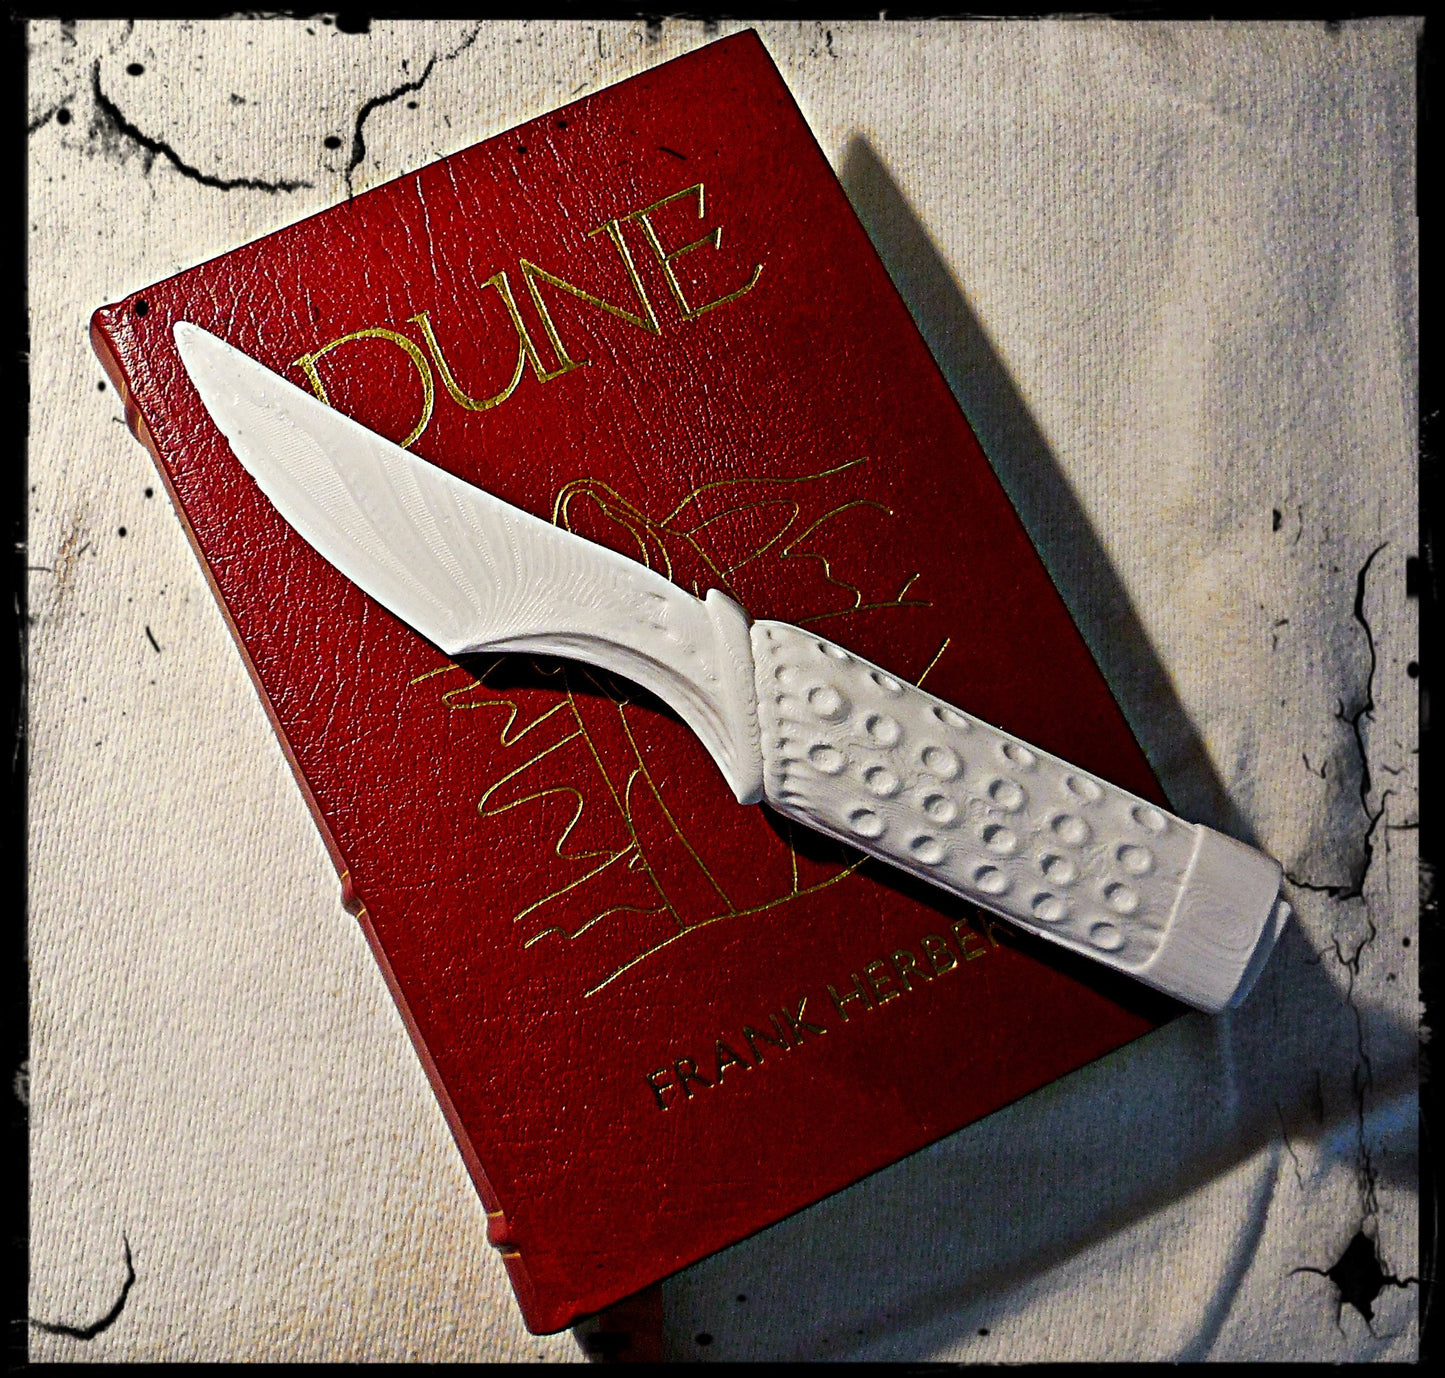 Dune 1984 Fremen Crysknife / Arrakis Knife /  Movie Cosplay Replica Prop - Safe